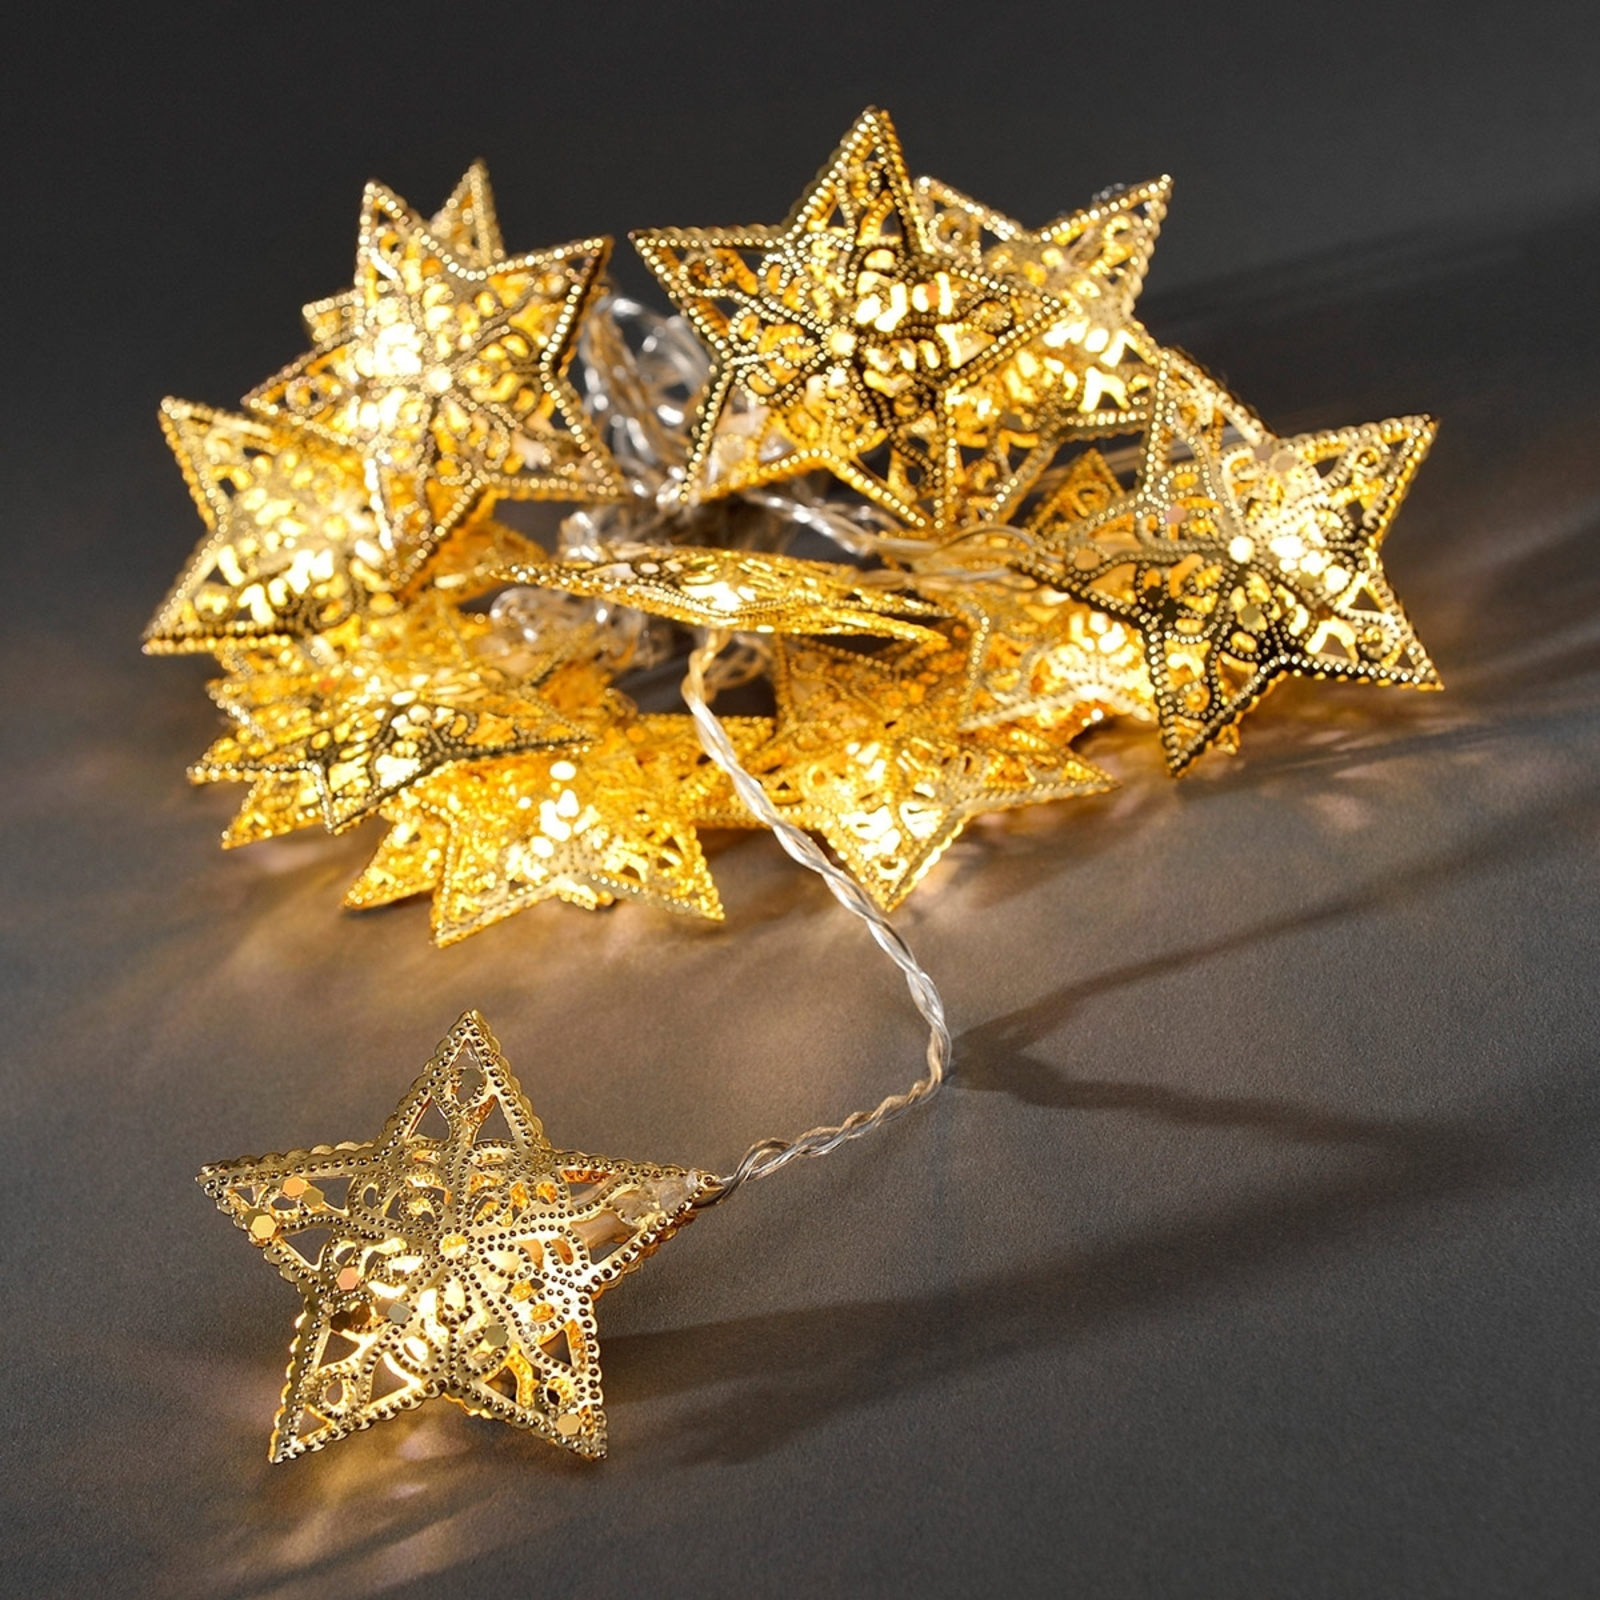 16-bulb LED string lights with golden stars